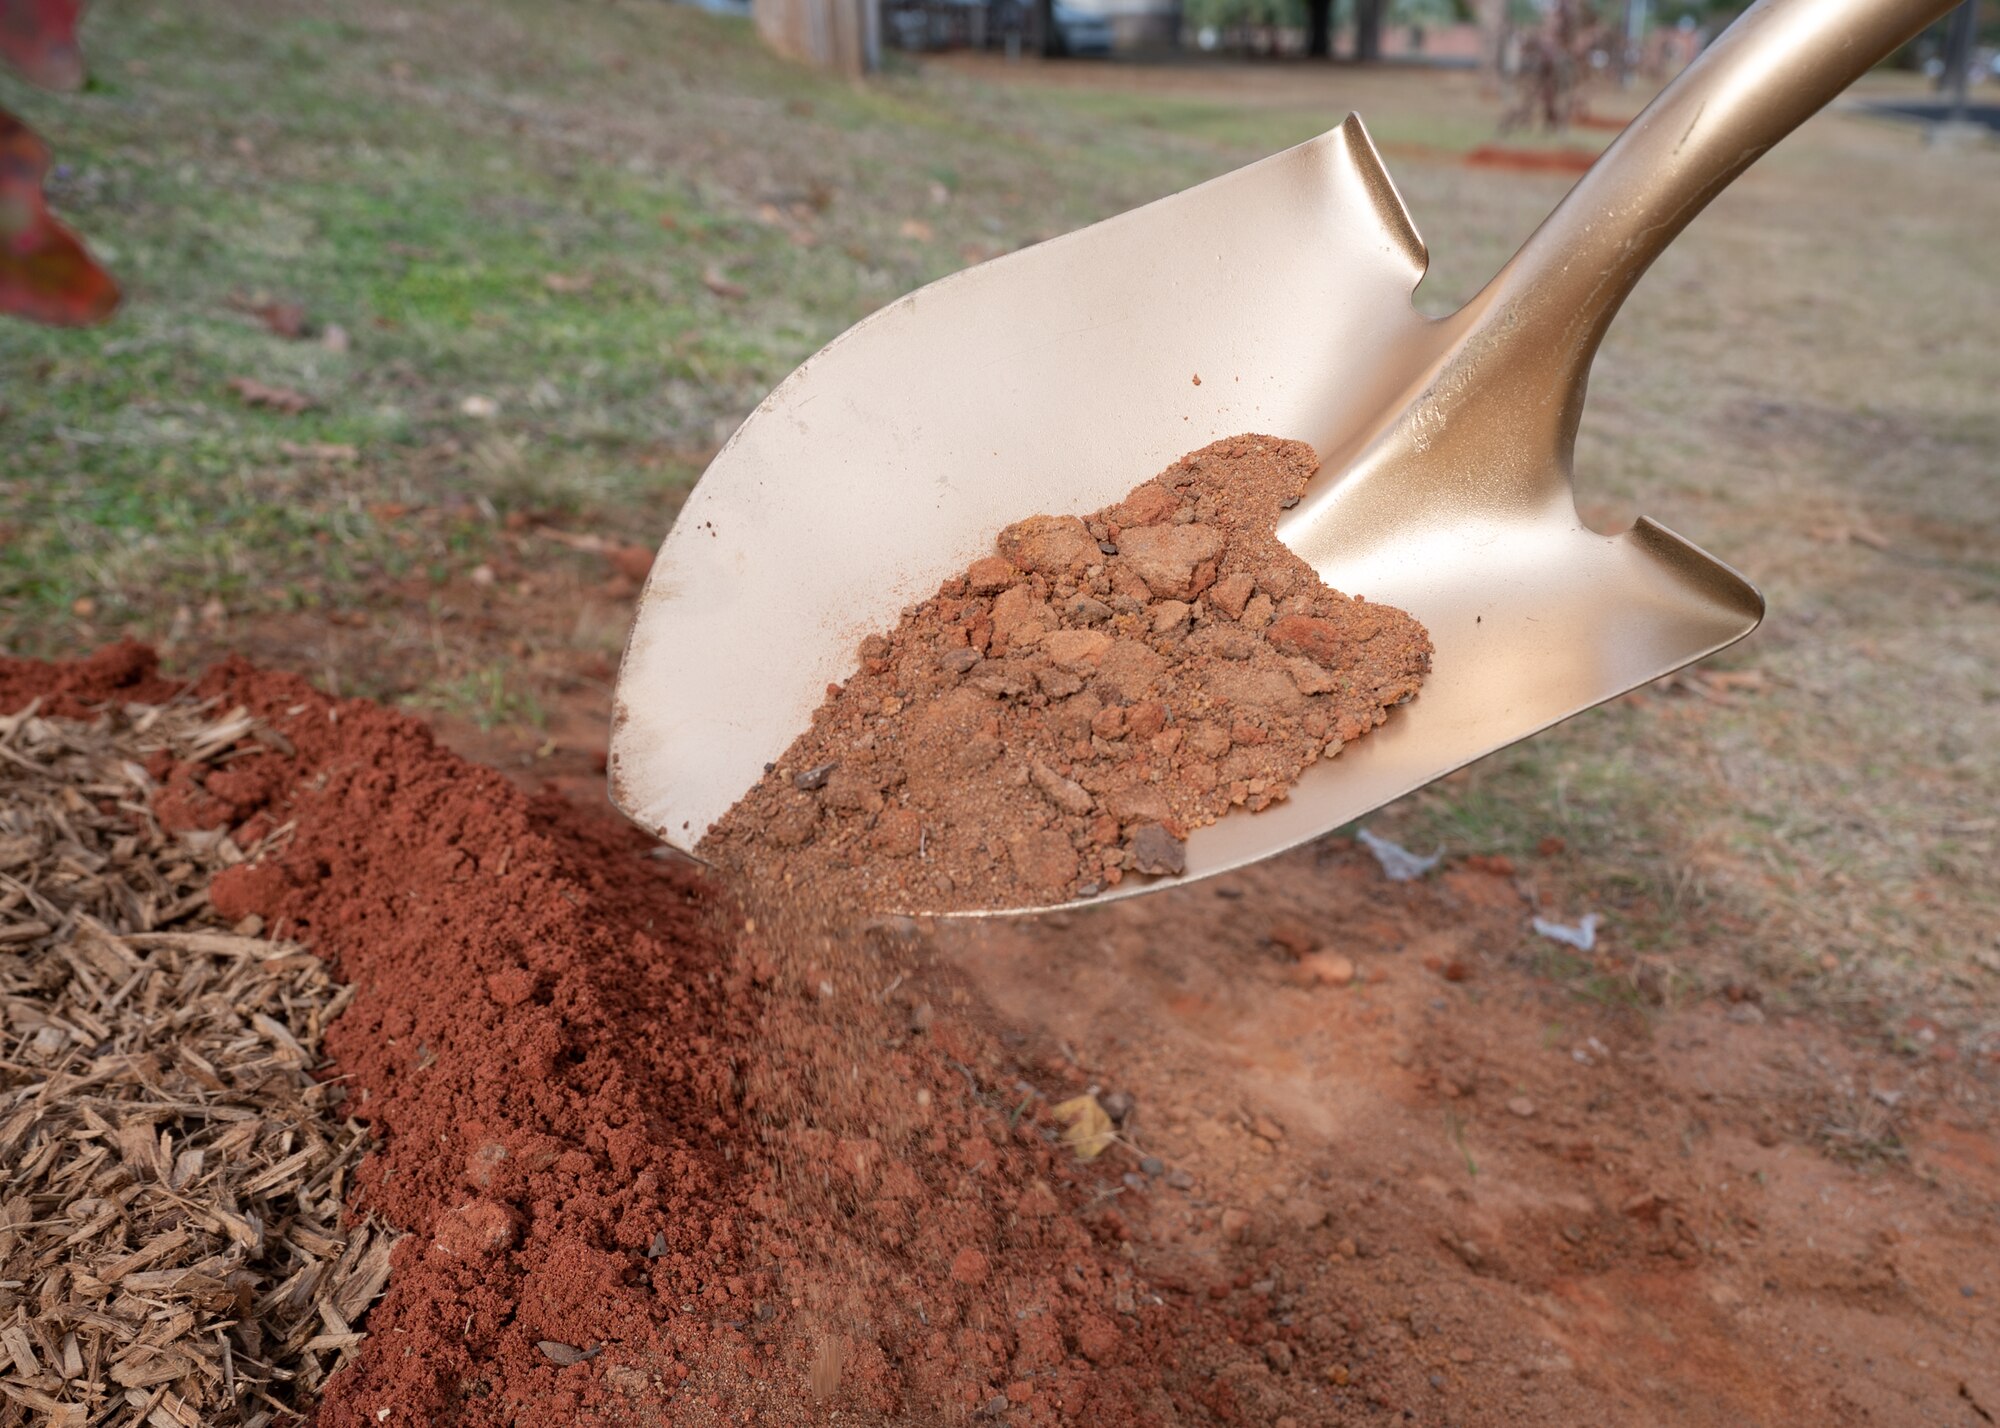 A close-up shot of a shovel dumping dirt at the base of a tree.